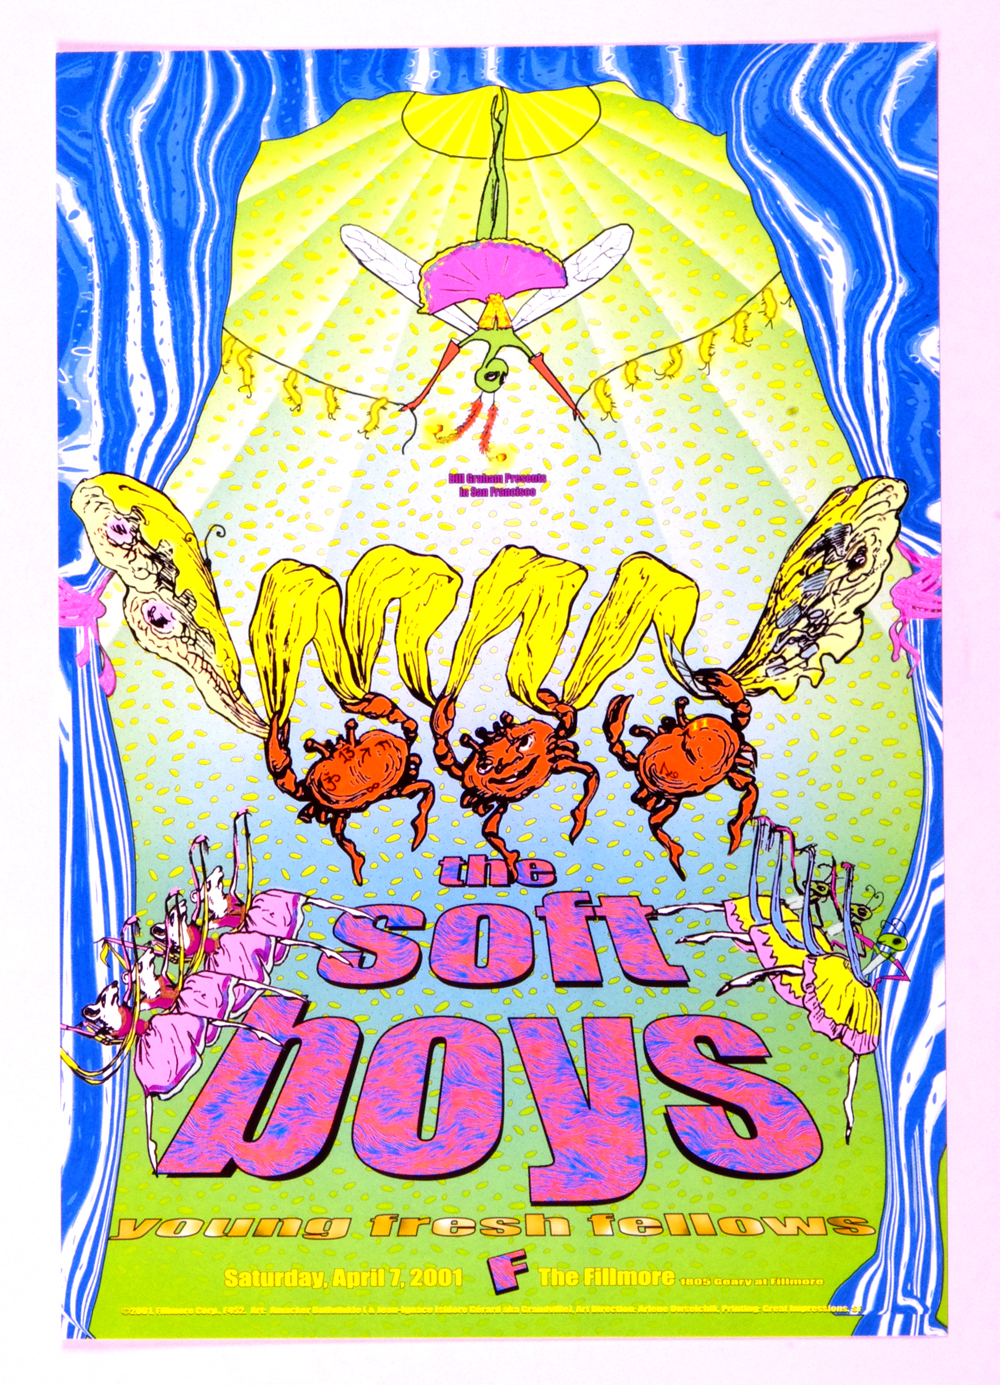 The Soft Boys Poster 2001 Apr 7 New Fillmore San Francisco